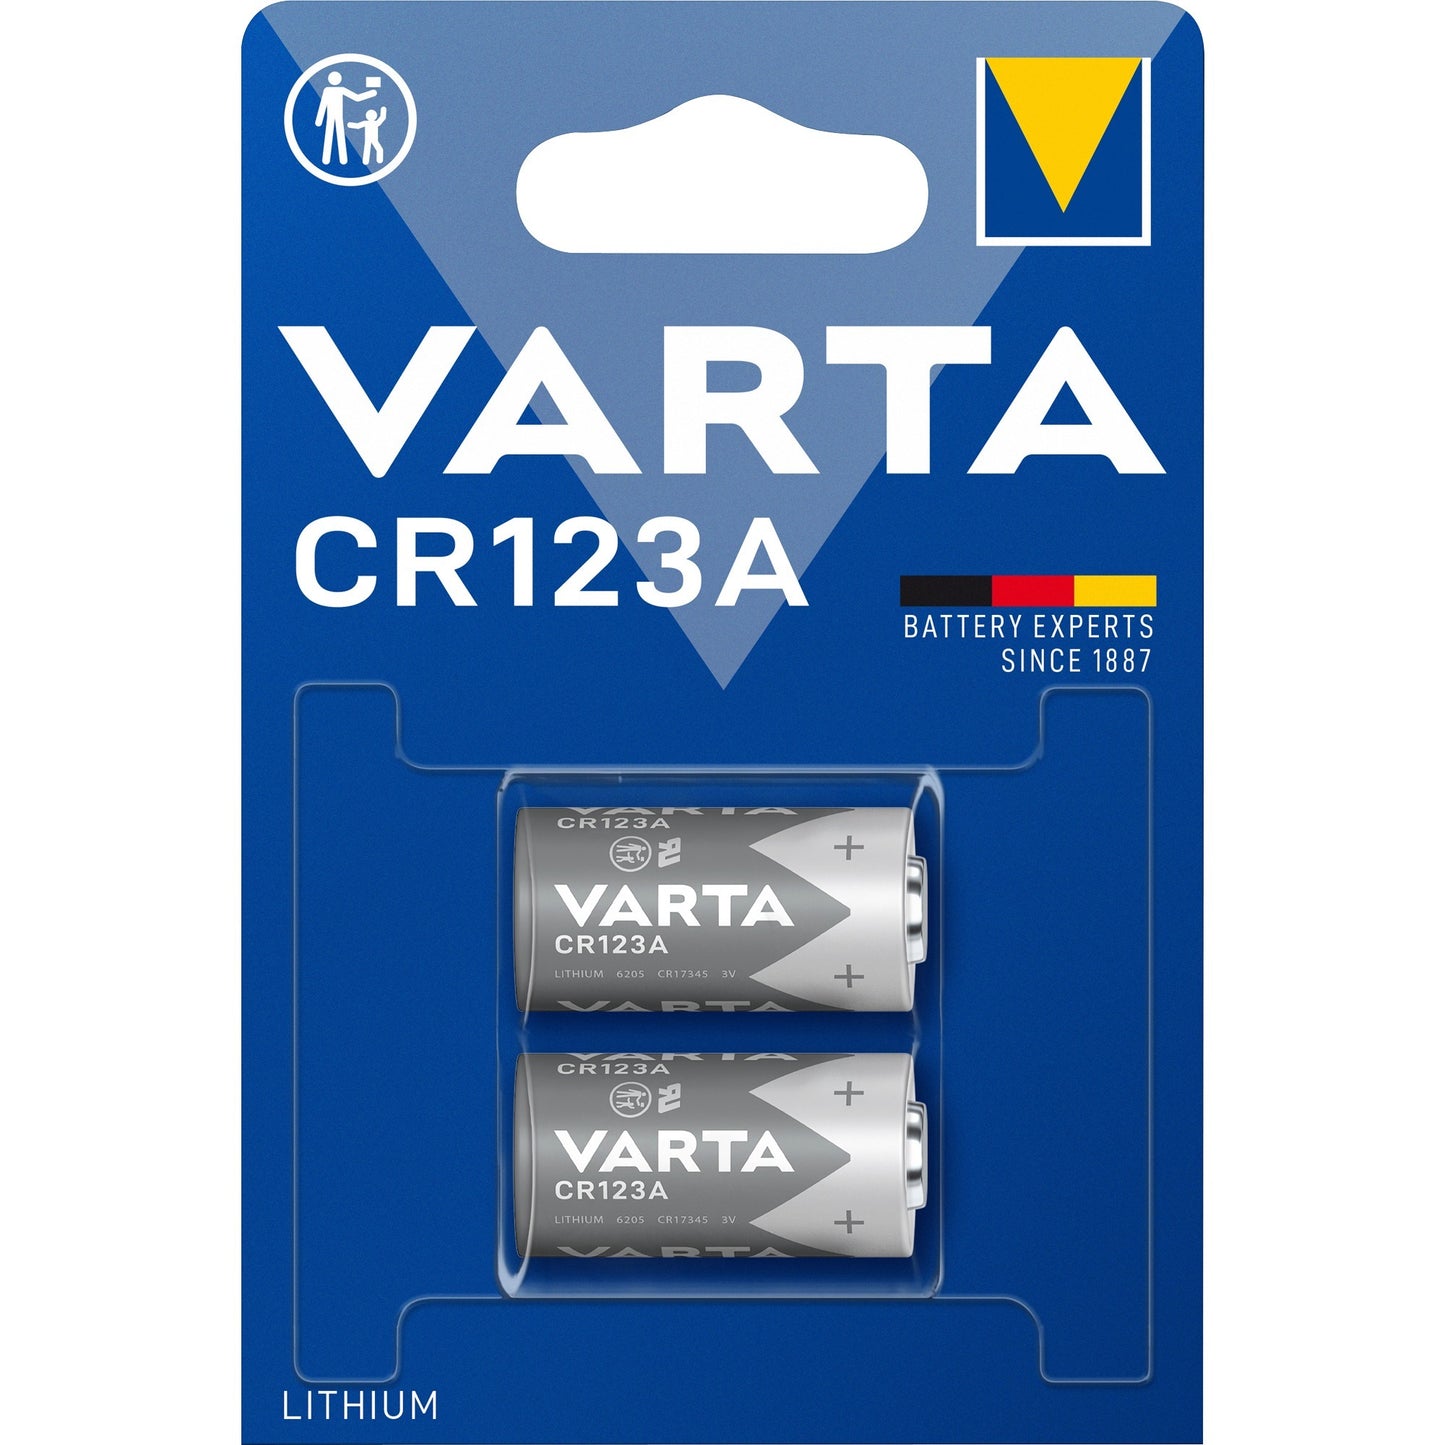 Varta Lithium Cylindrical CR123A